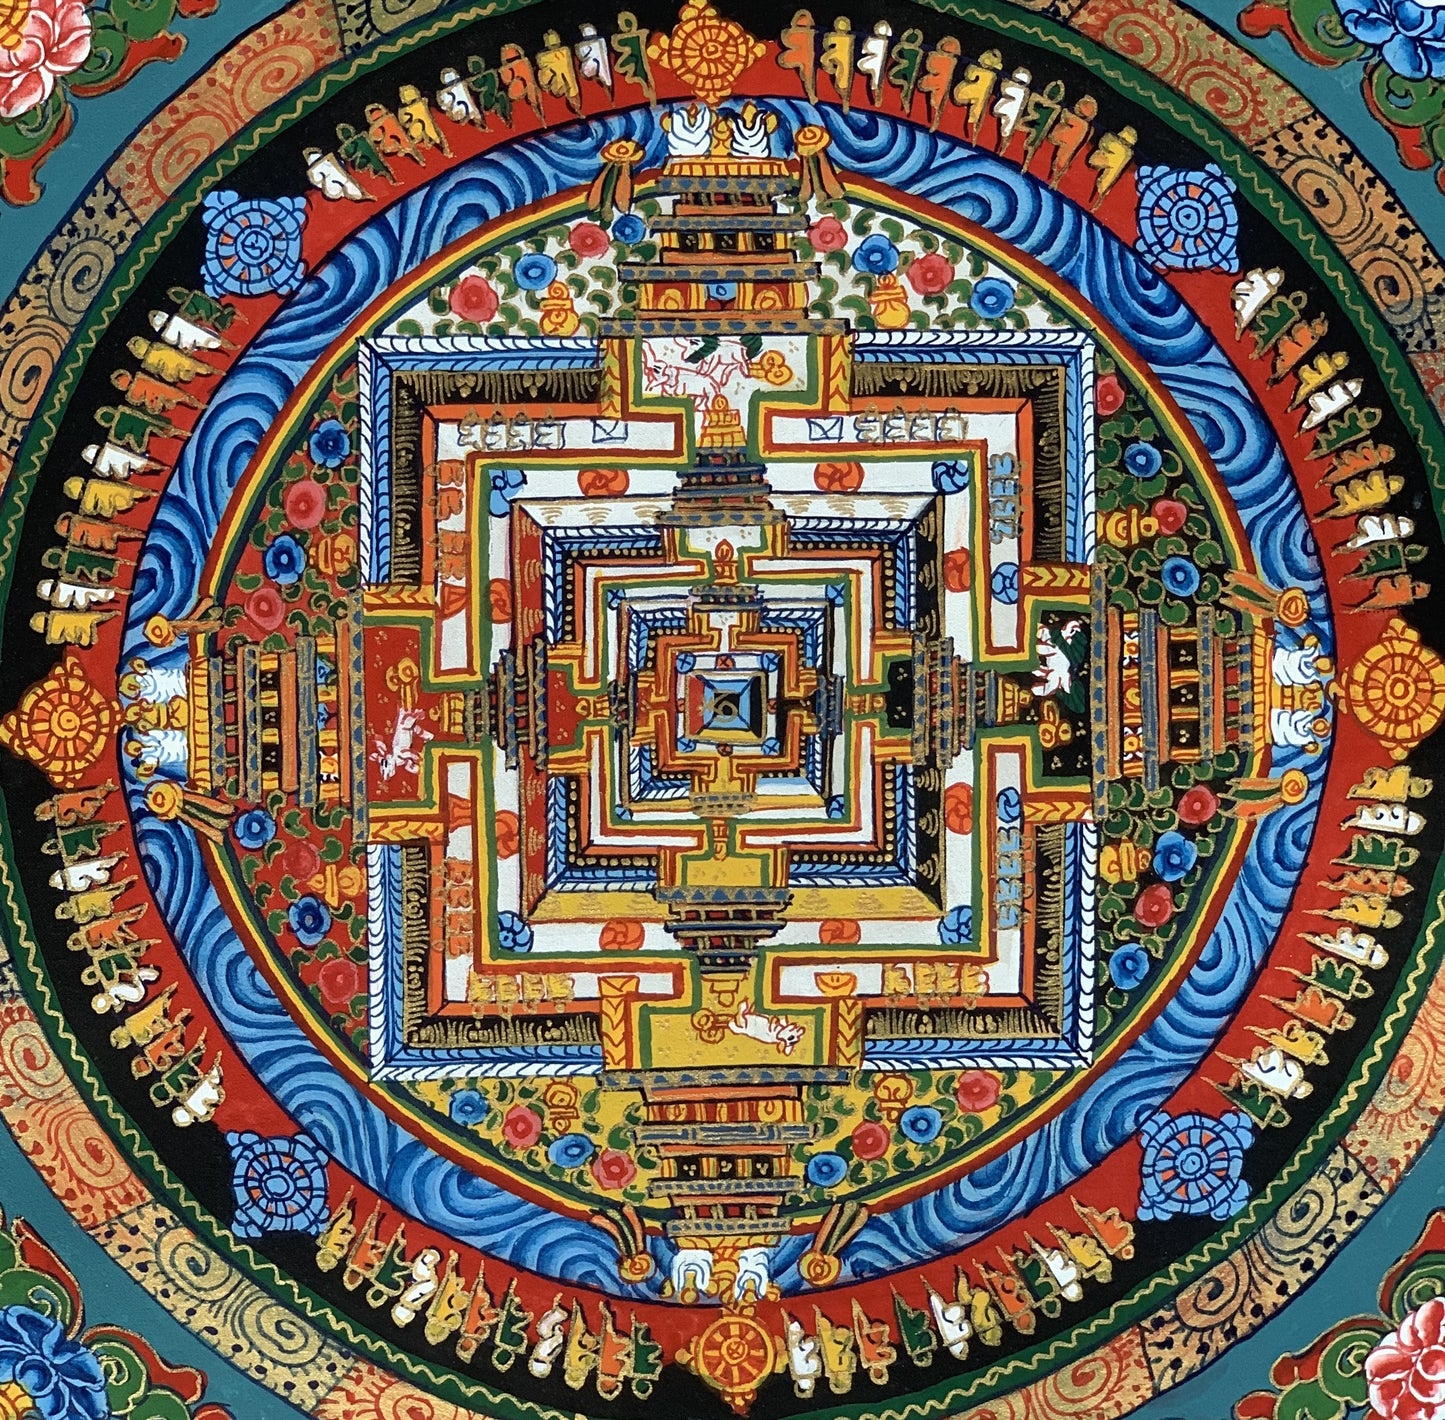 Wheel of Life, Wheel of Time, Kalachakra, Mantra Mandala, Tibetan Thangka Painting, Original Art  13 x 13 Inch